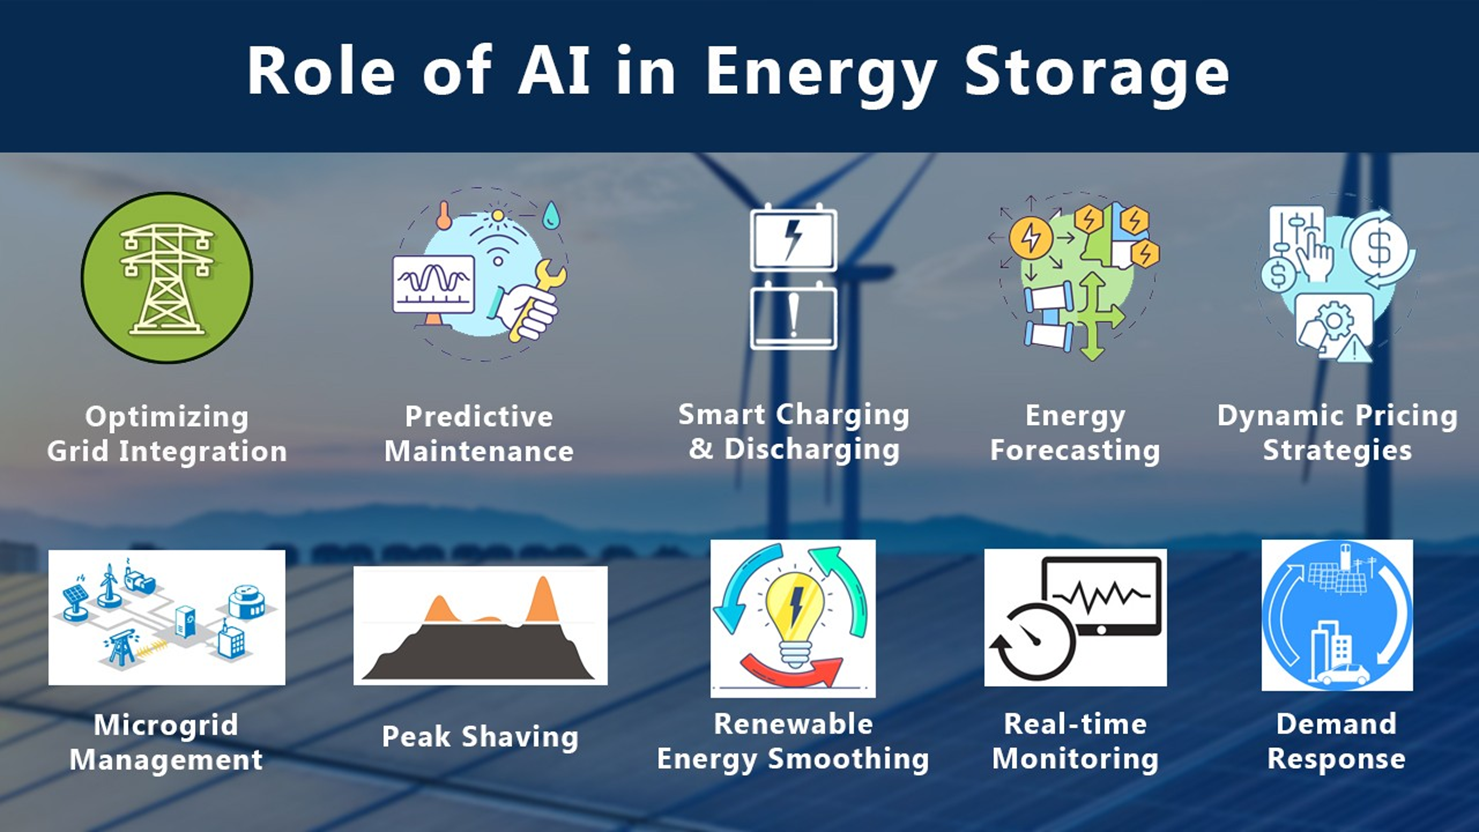 AI-Enhanced Energy Management Systems: Revolutionizing Microgrid and Minigrid Battery Storage